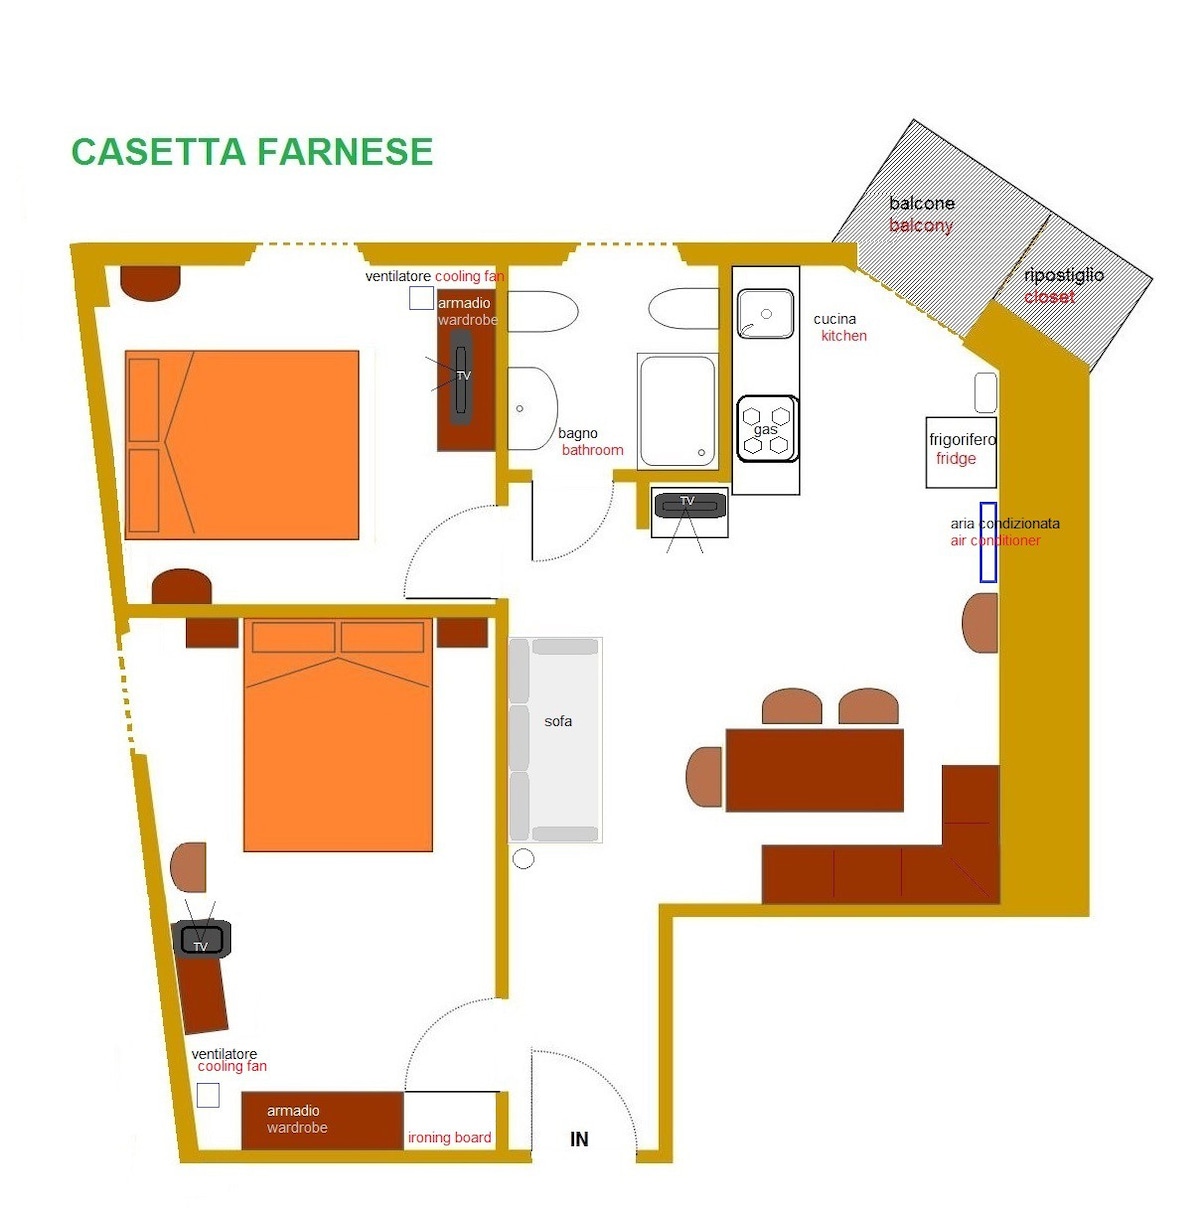 Casetta Farnese